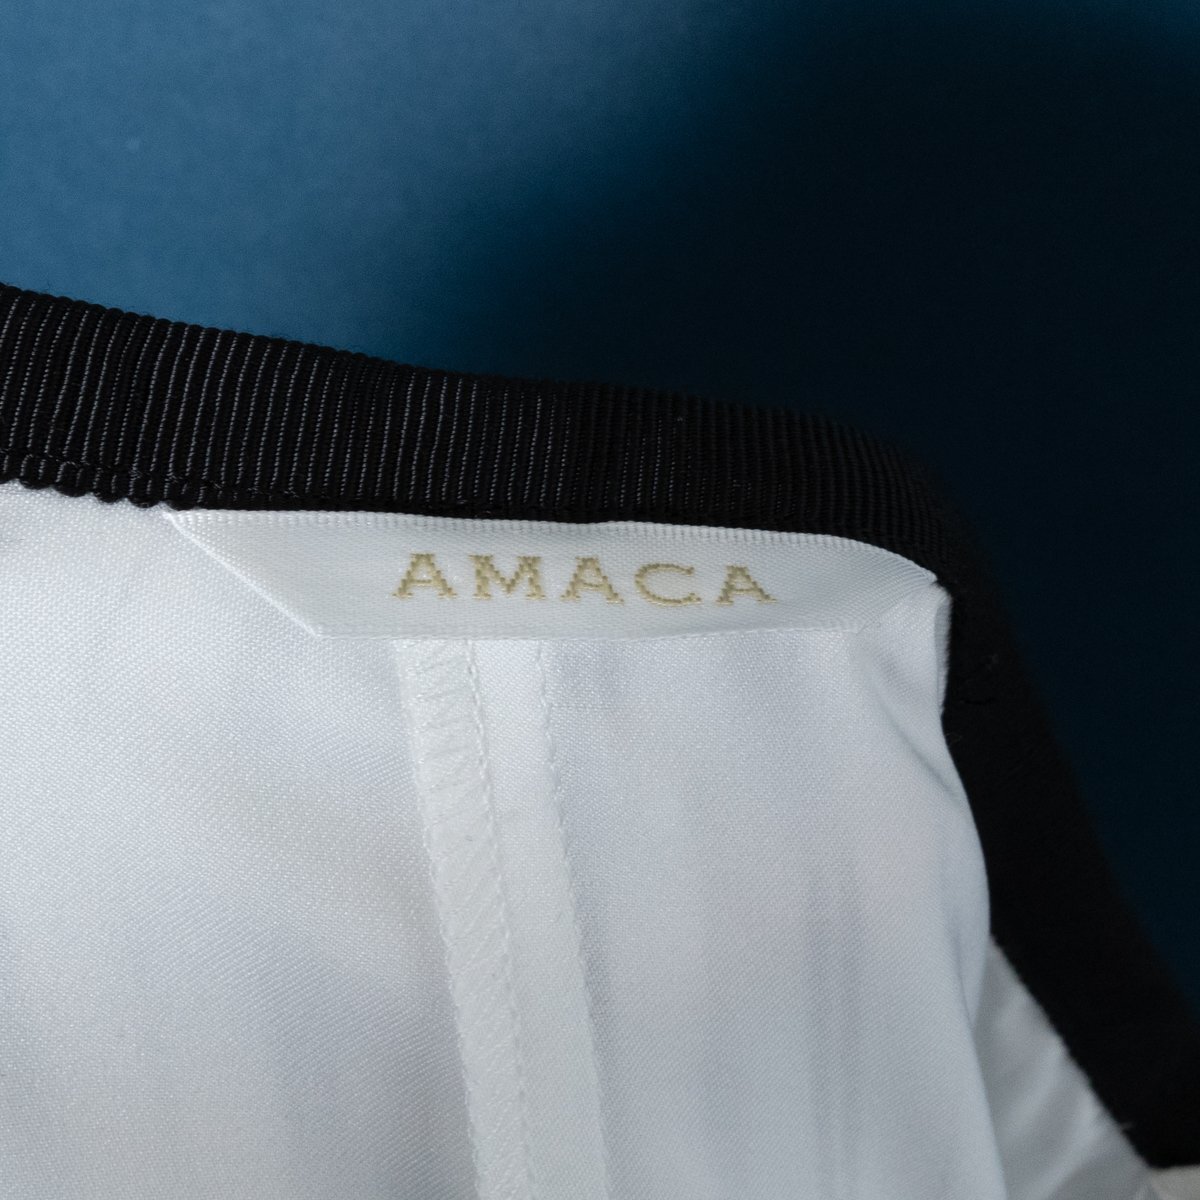 AMACA アマカ ストライプ柄 フレアスカート 総柄 ボトムス 薄手 裏地あり 38 ポリエステル100% ホワイト 白 綺麗め カジュアル_画像2